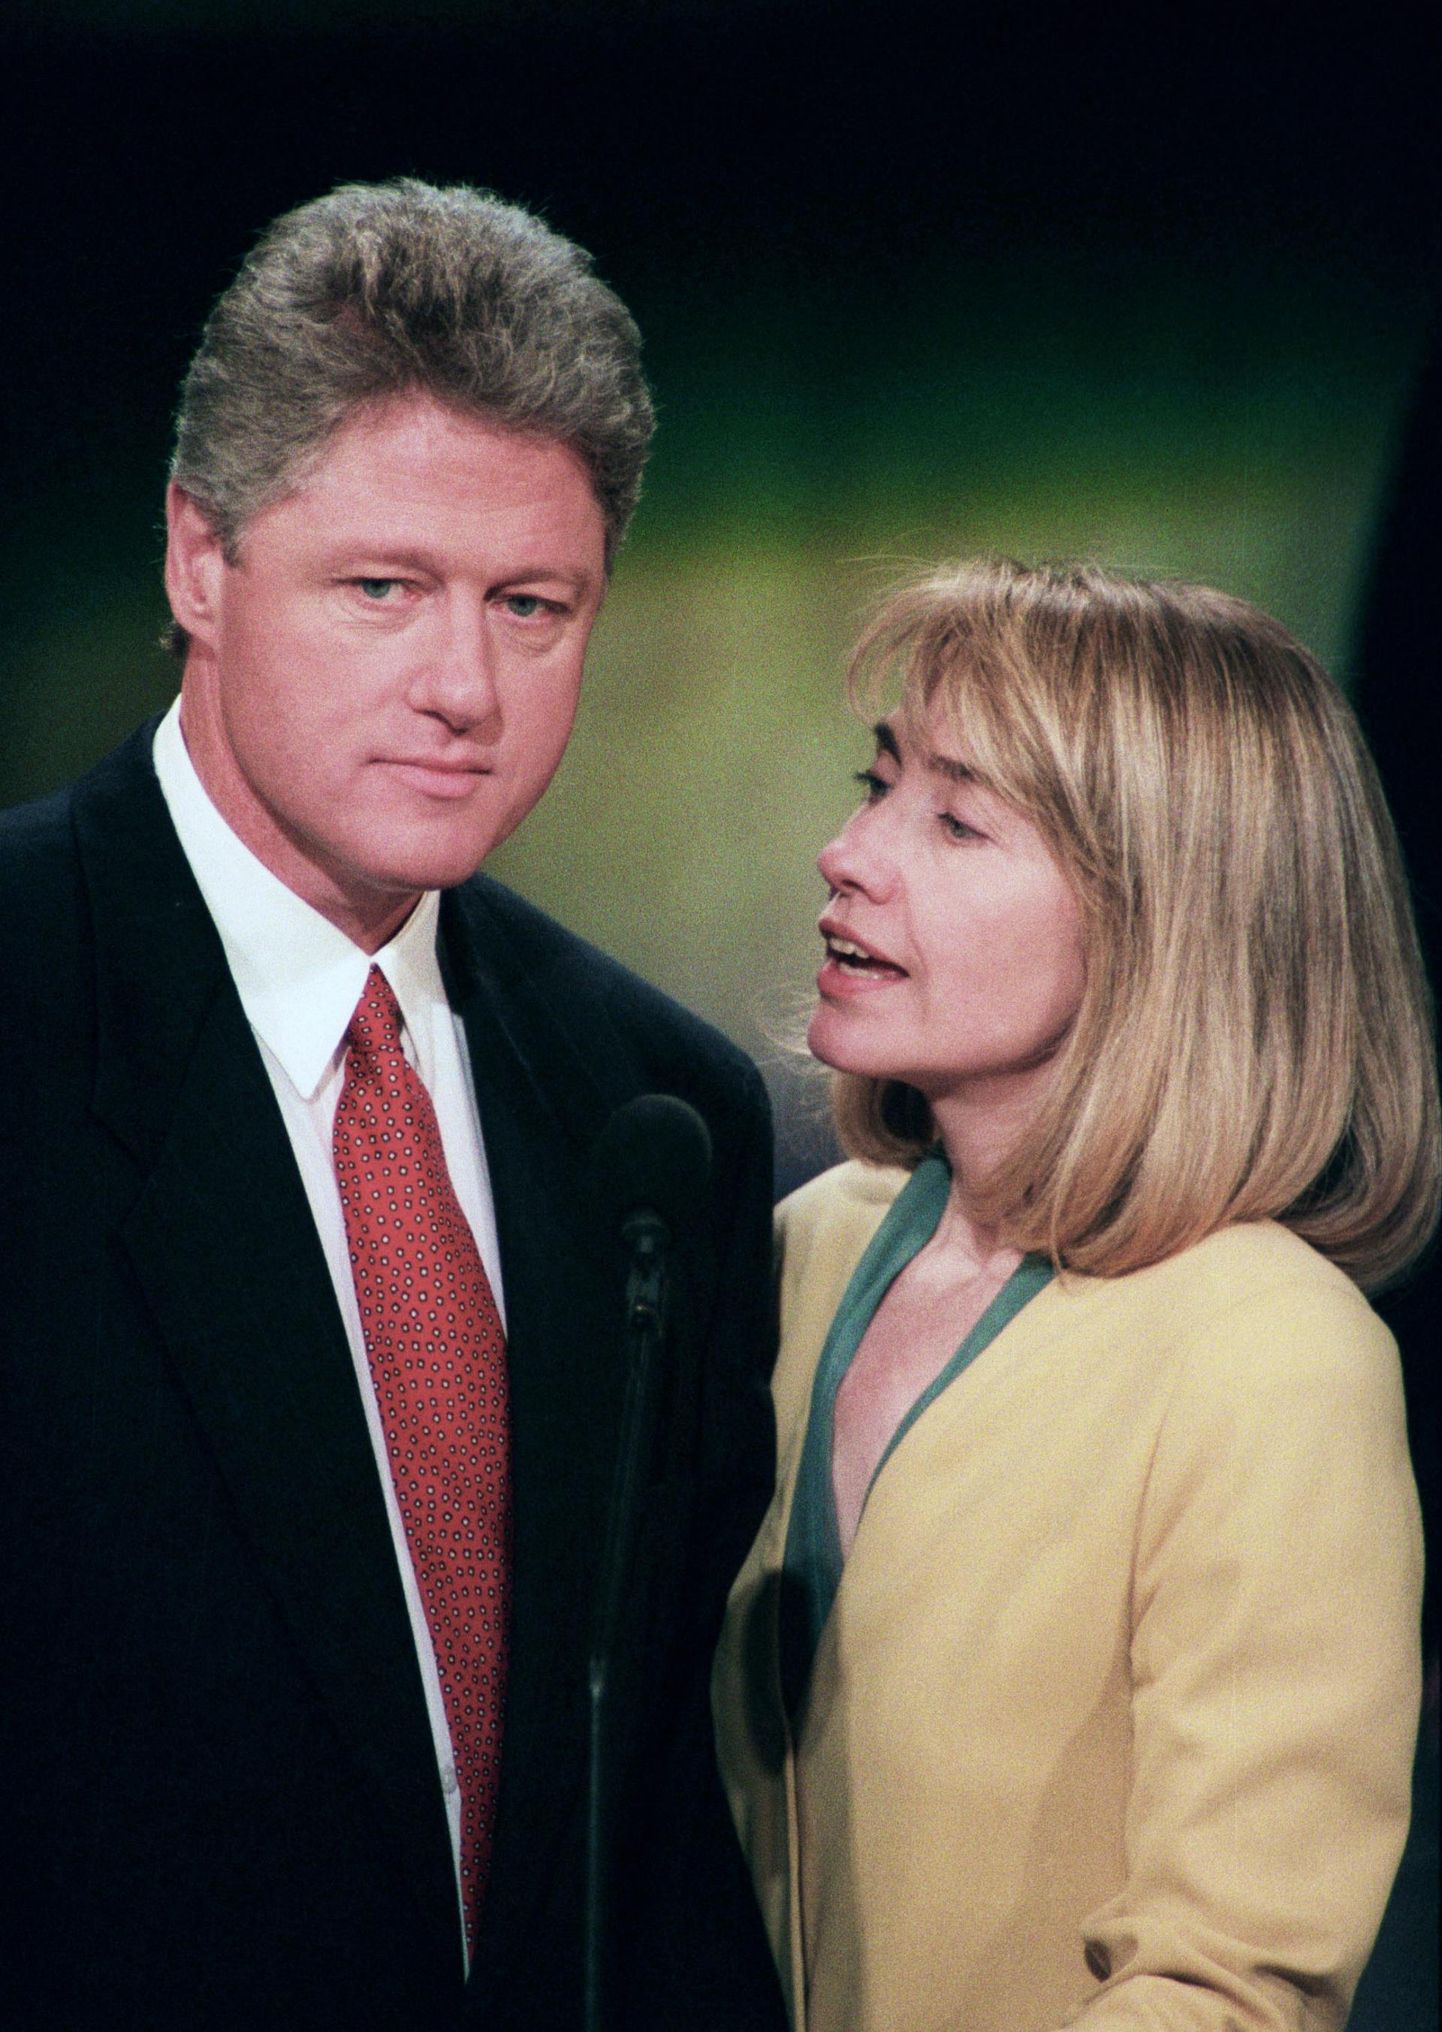 Bill ja Hillary Clinton aastal 1992. REUTERS/Terry Bochatey/Files (UNITED STATES - Tags: POLITICS) FOTO: Terry Bochatey